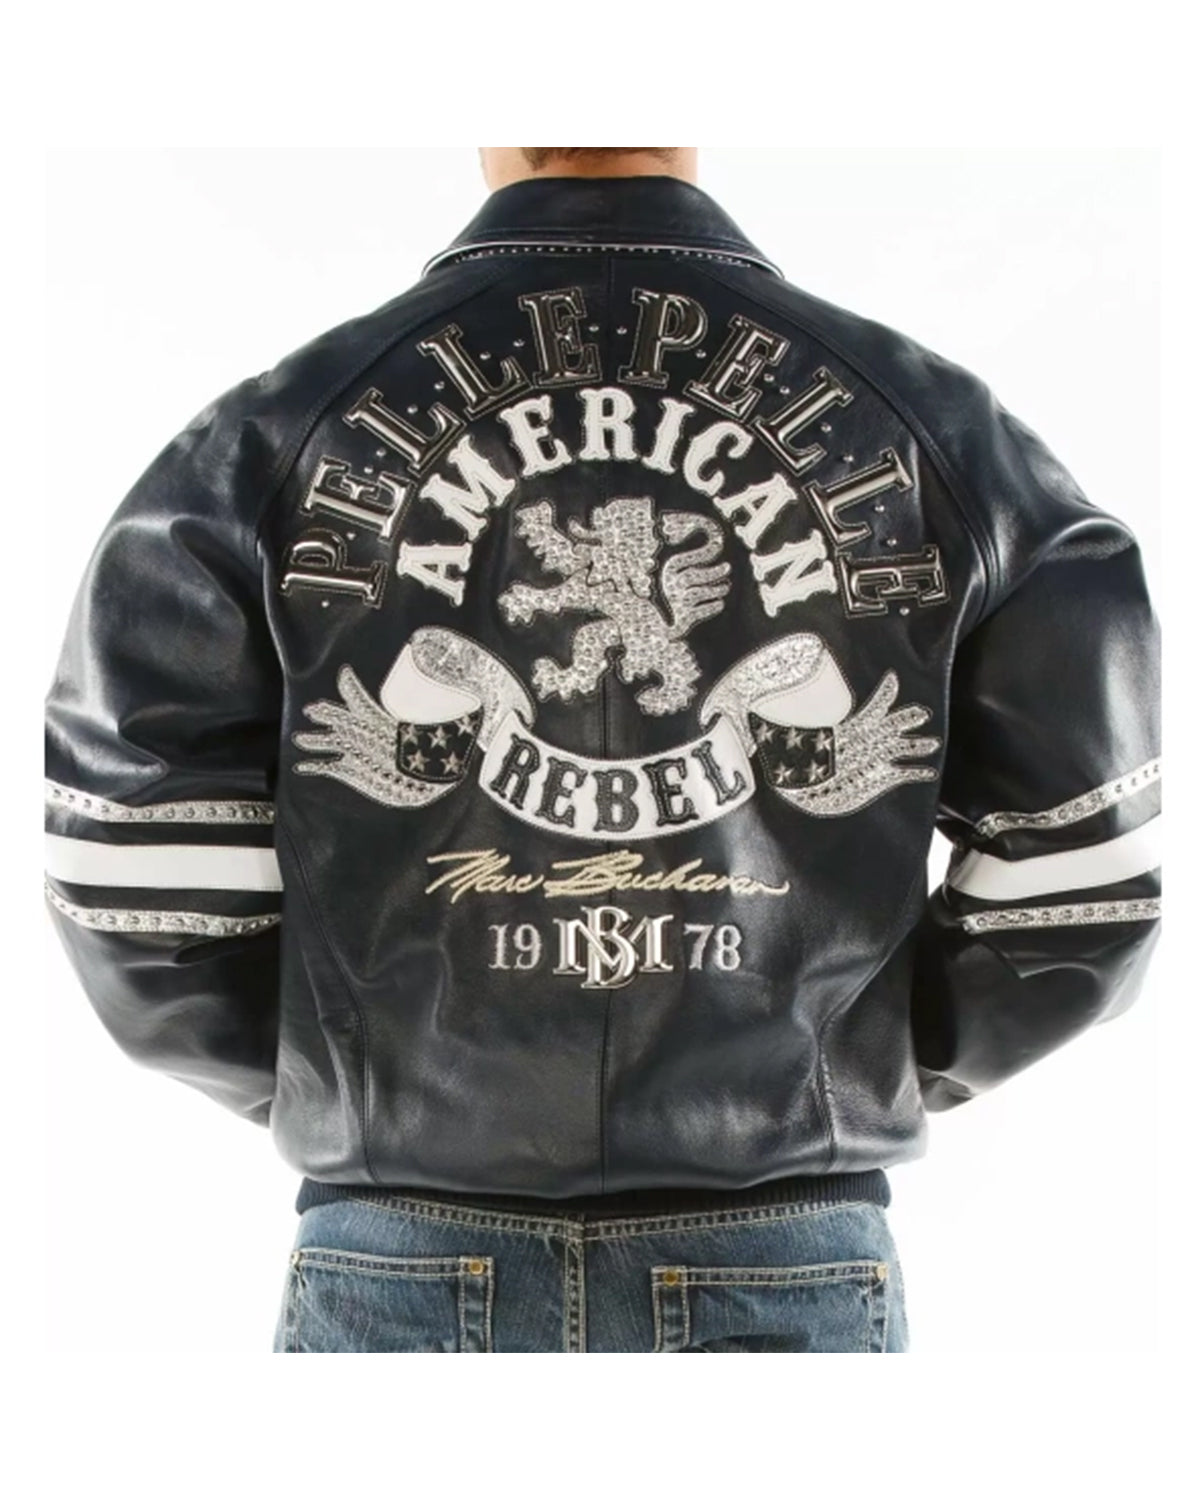 Mens Pelle Pelle Rebel Black Leather Jackets | Elite Jacket